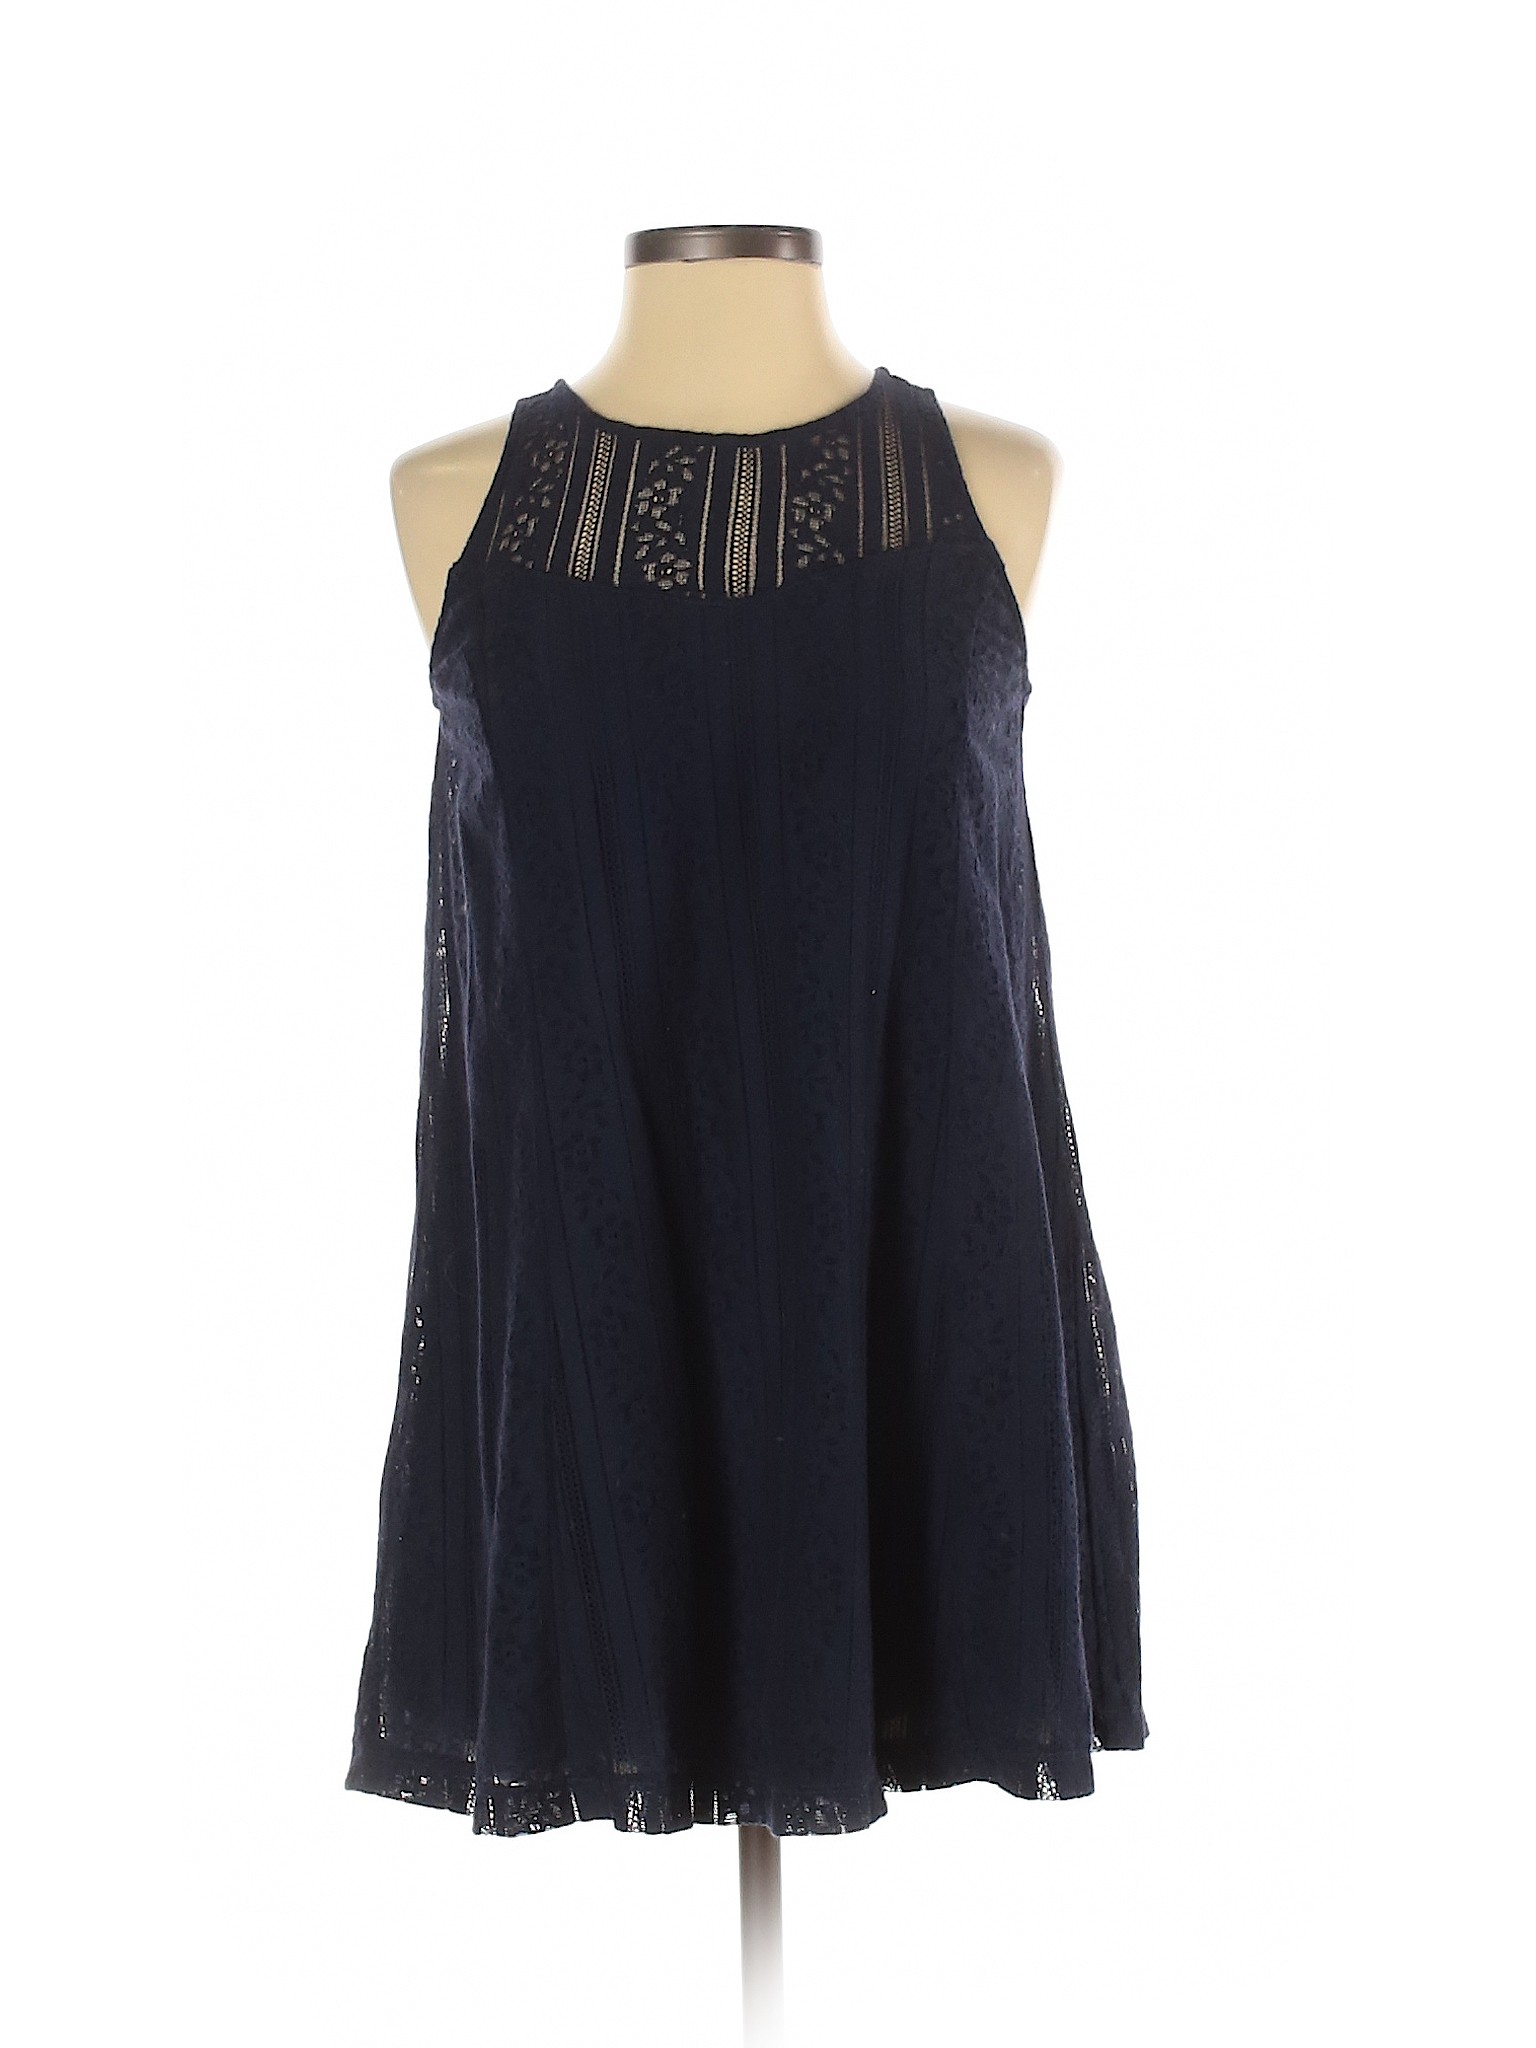 Abercrombie & Fitch Women Black Casual Dress XS Petites | eBay